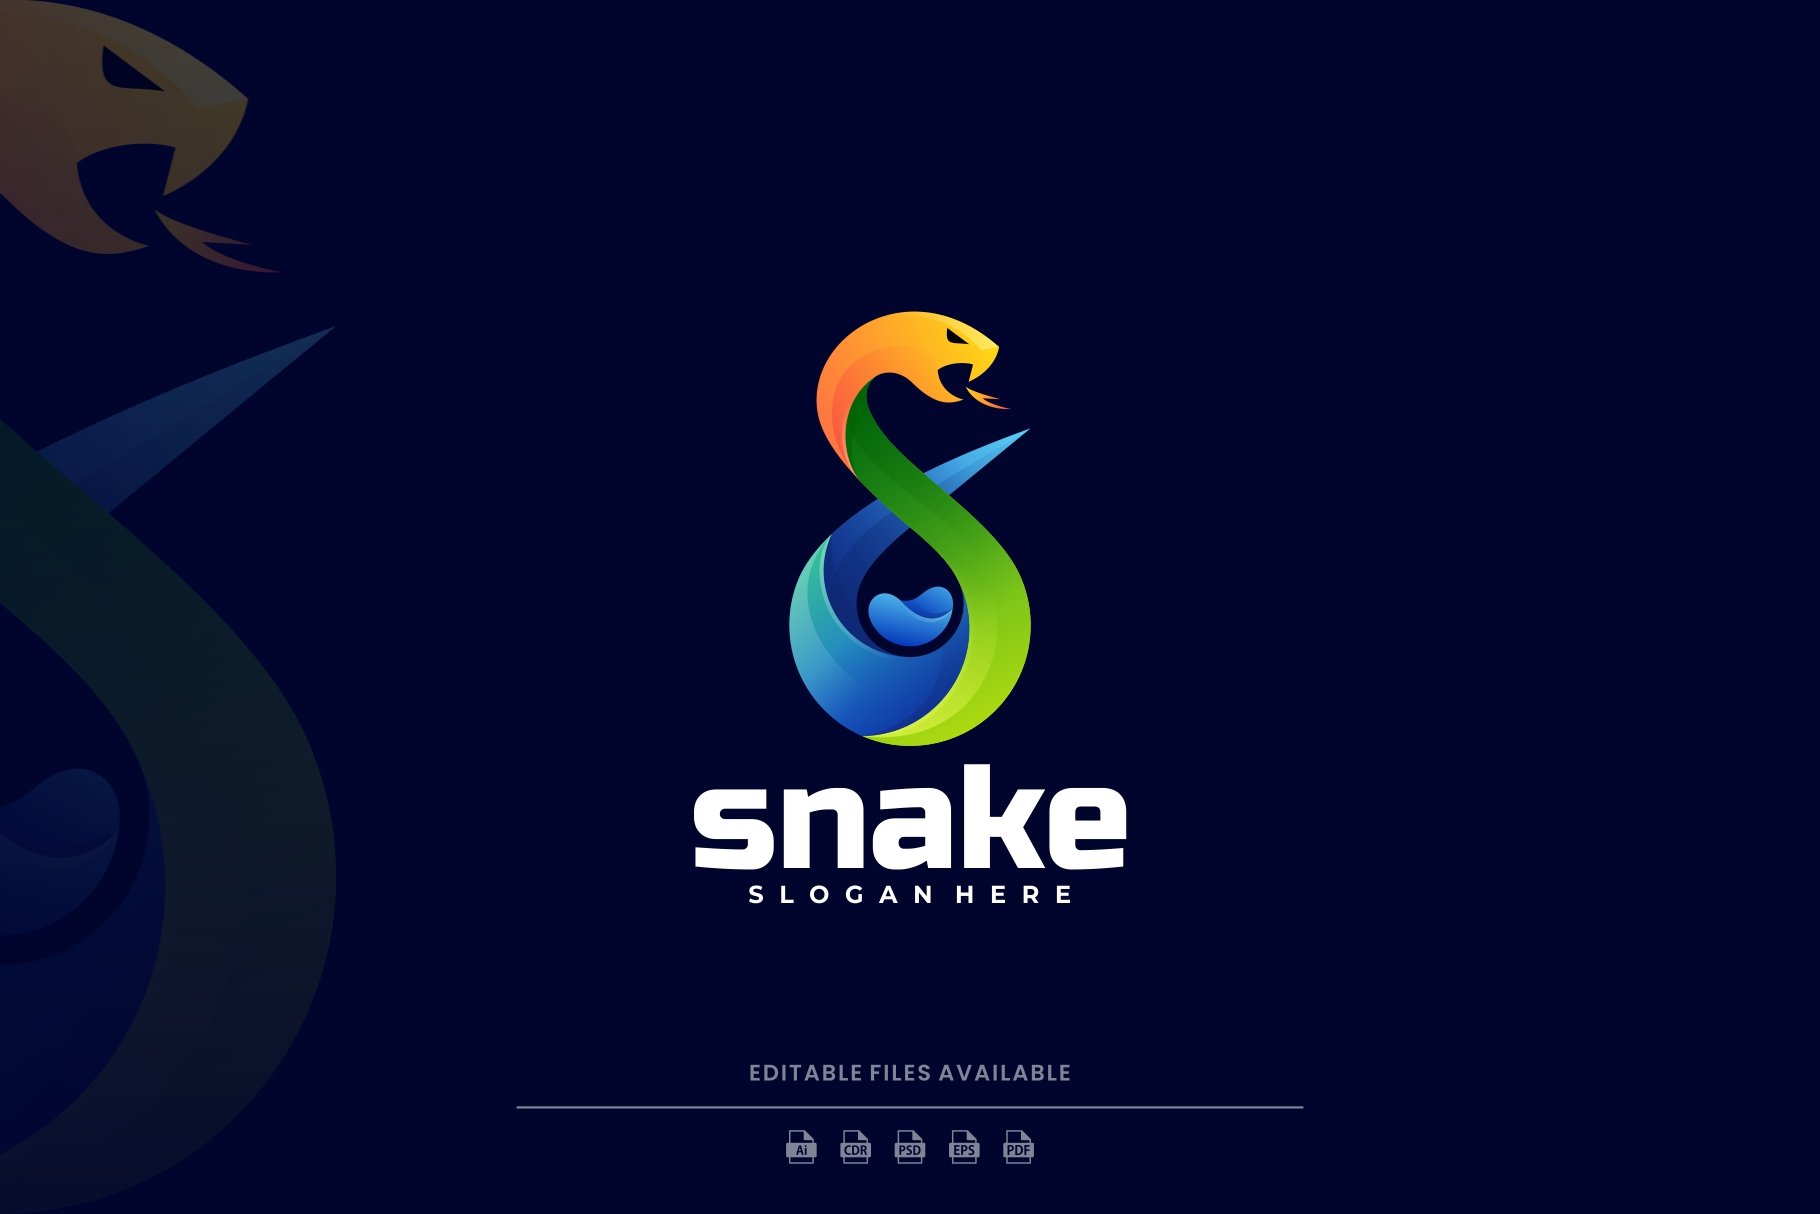 Snake Gradient Logo cover image.